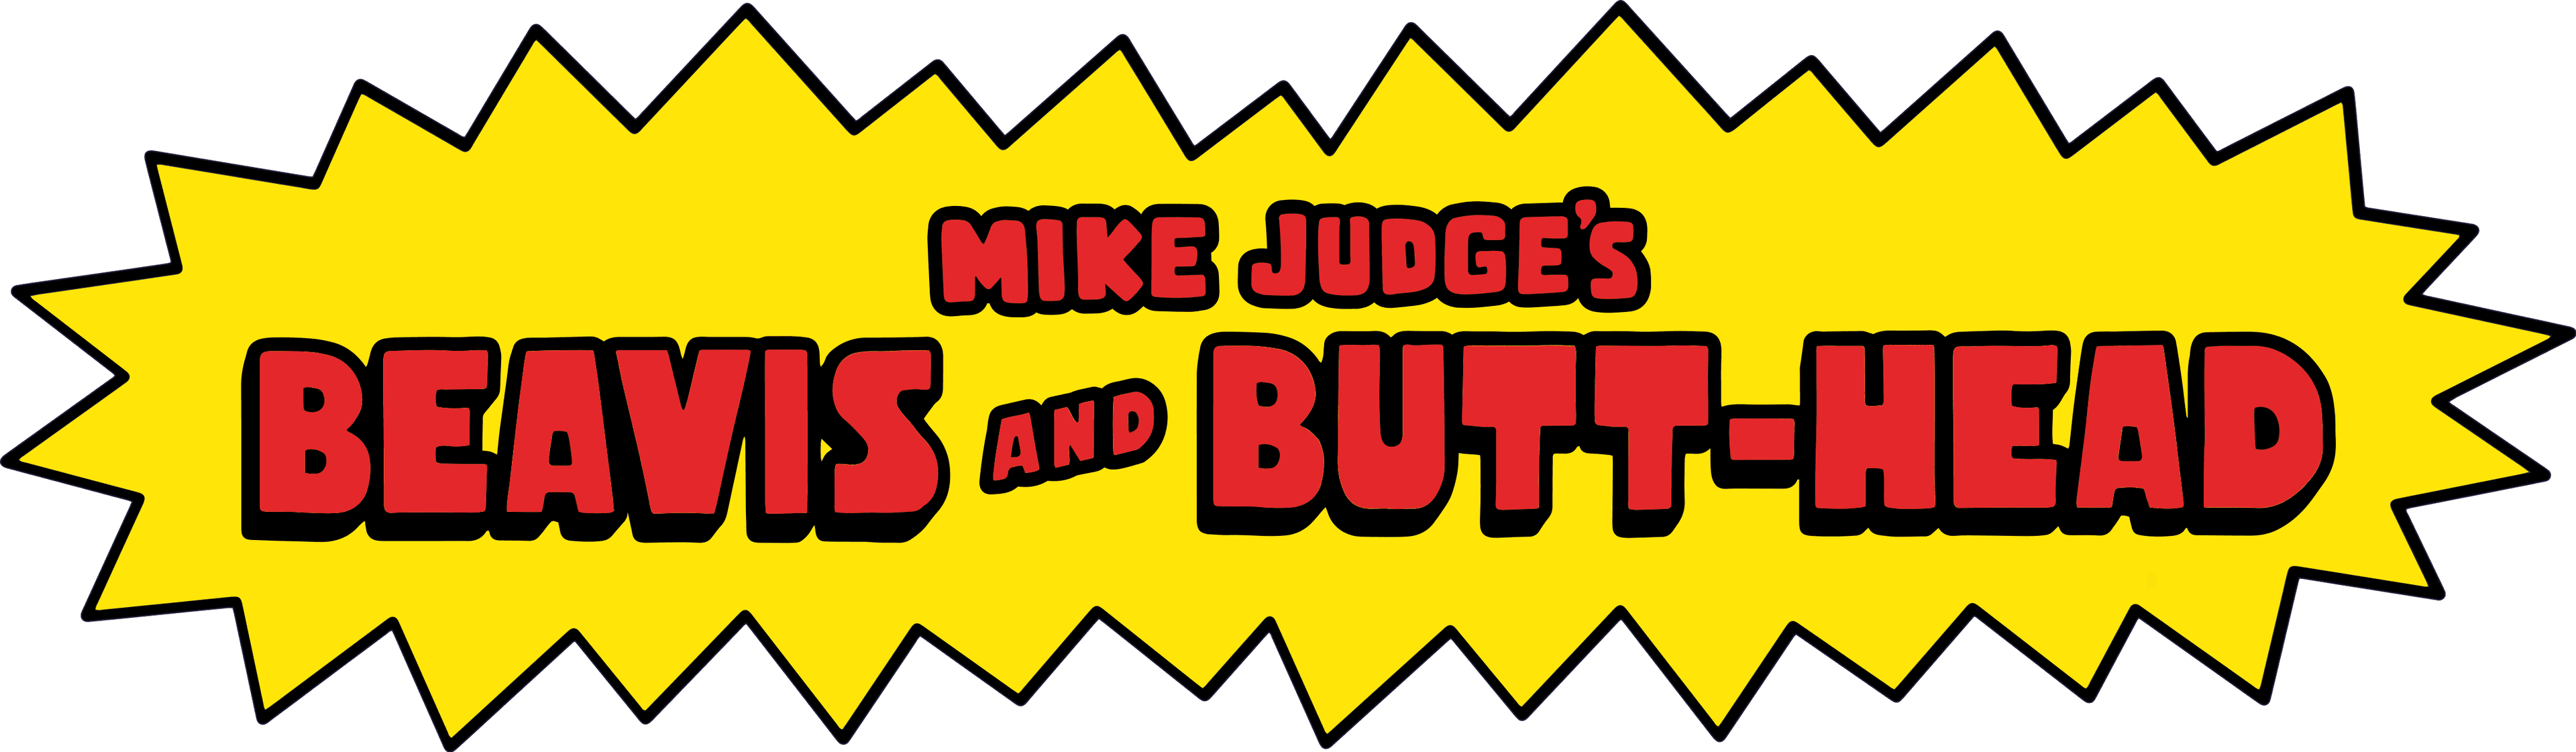 Mike Judge's Beavis and Butt-Head logo